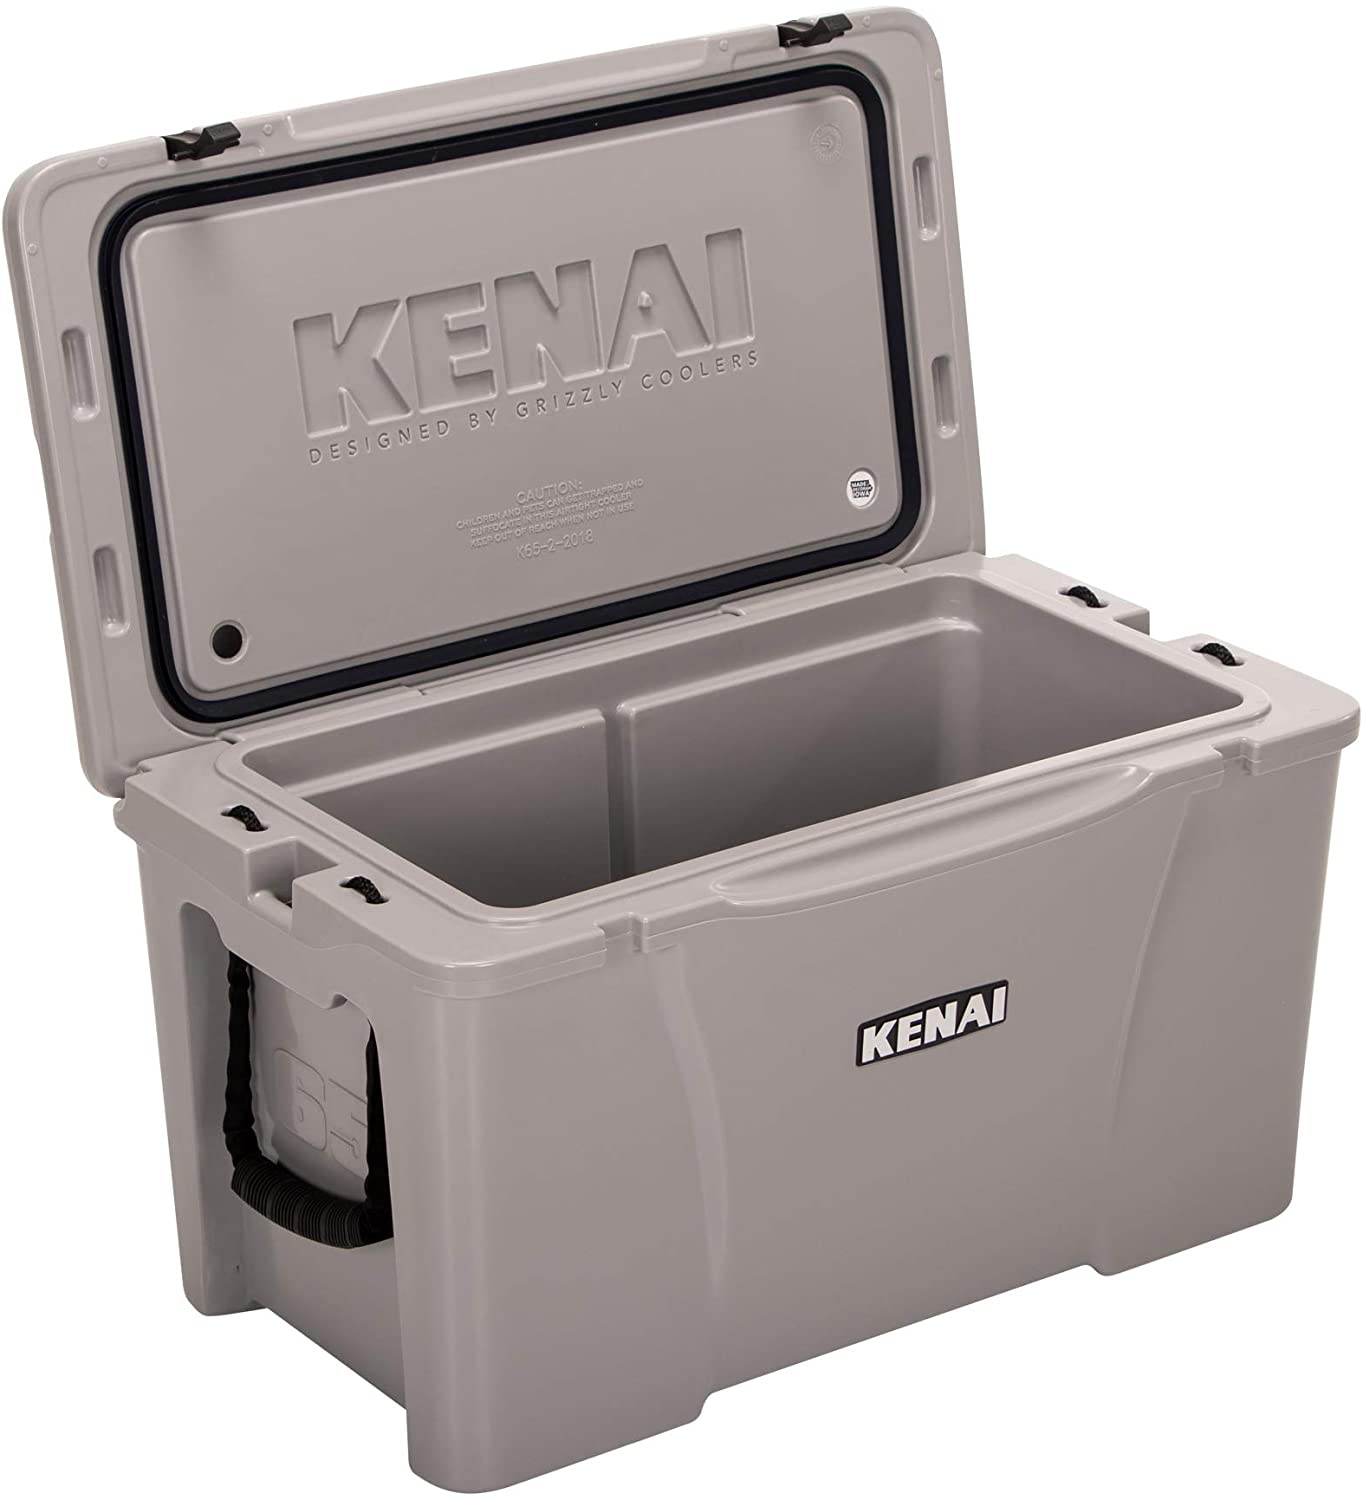 KENAI 65 Cooler, Gray, 65 QT, Made in USA Specs